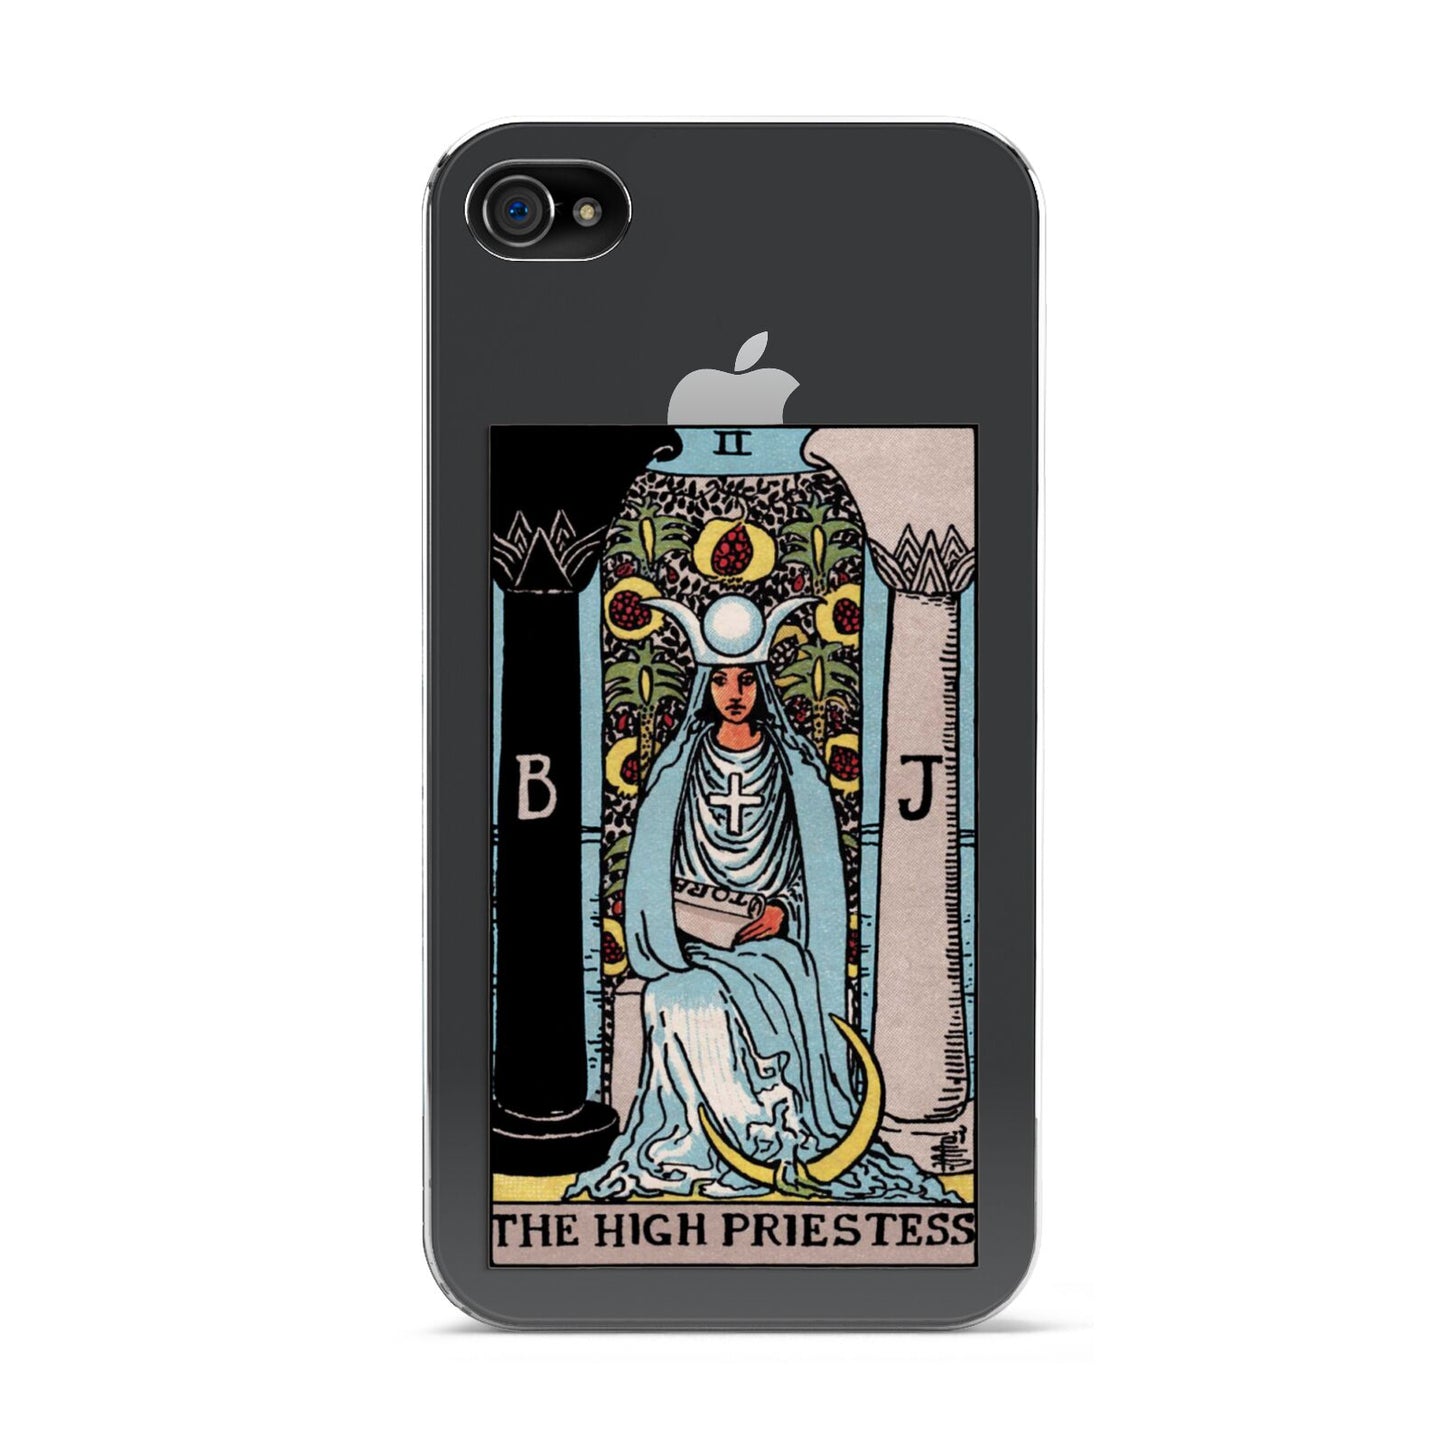 The High Priestess Tarot Card Apple iPhone 4s Case